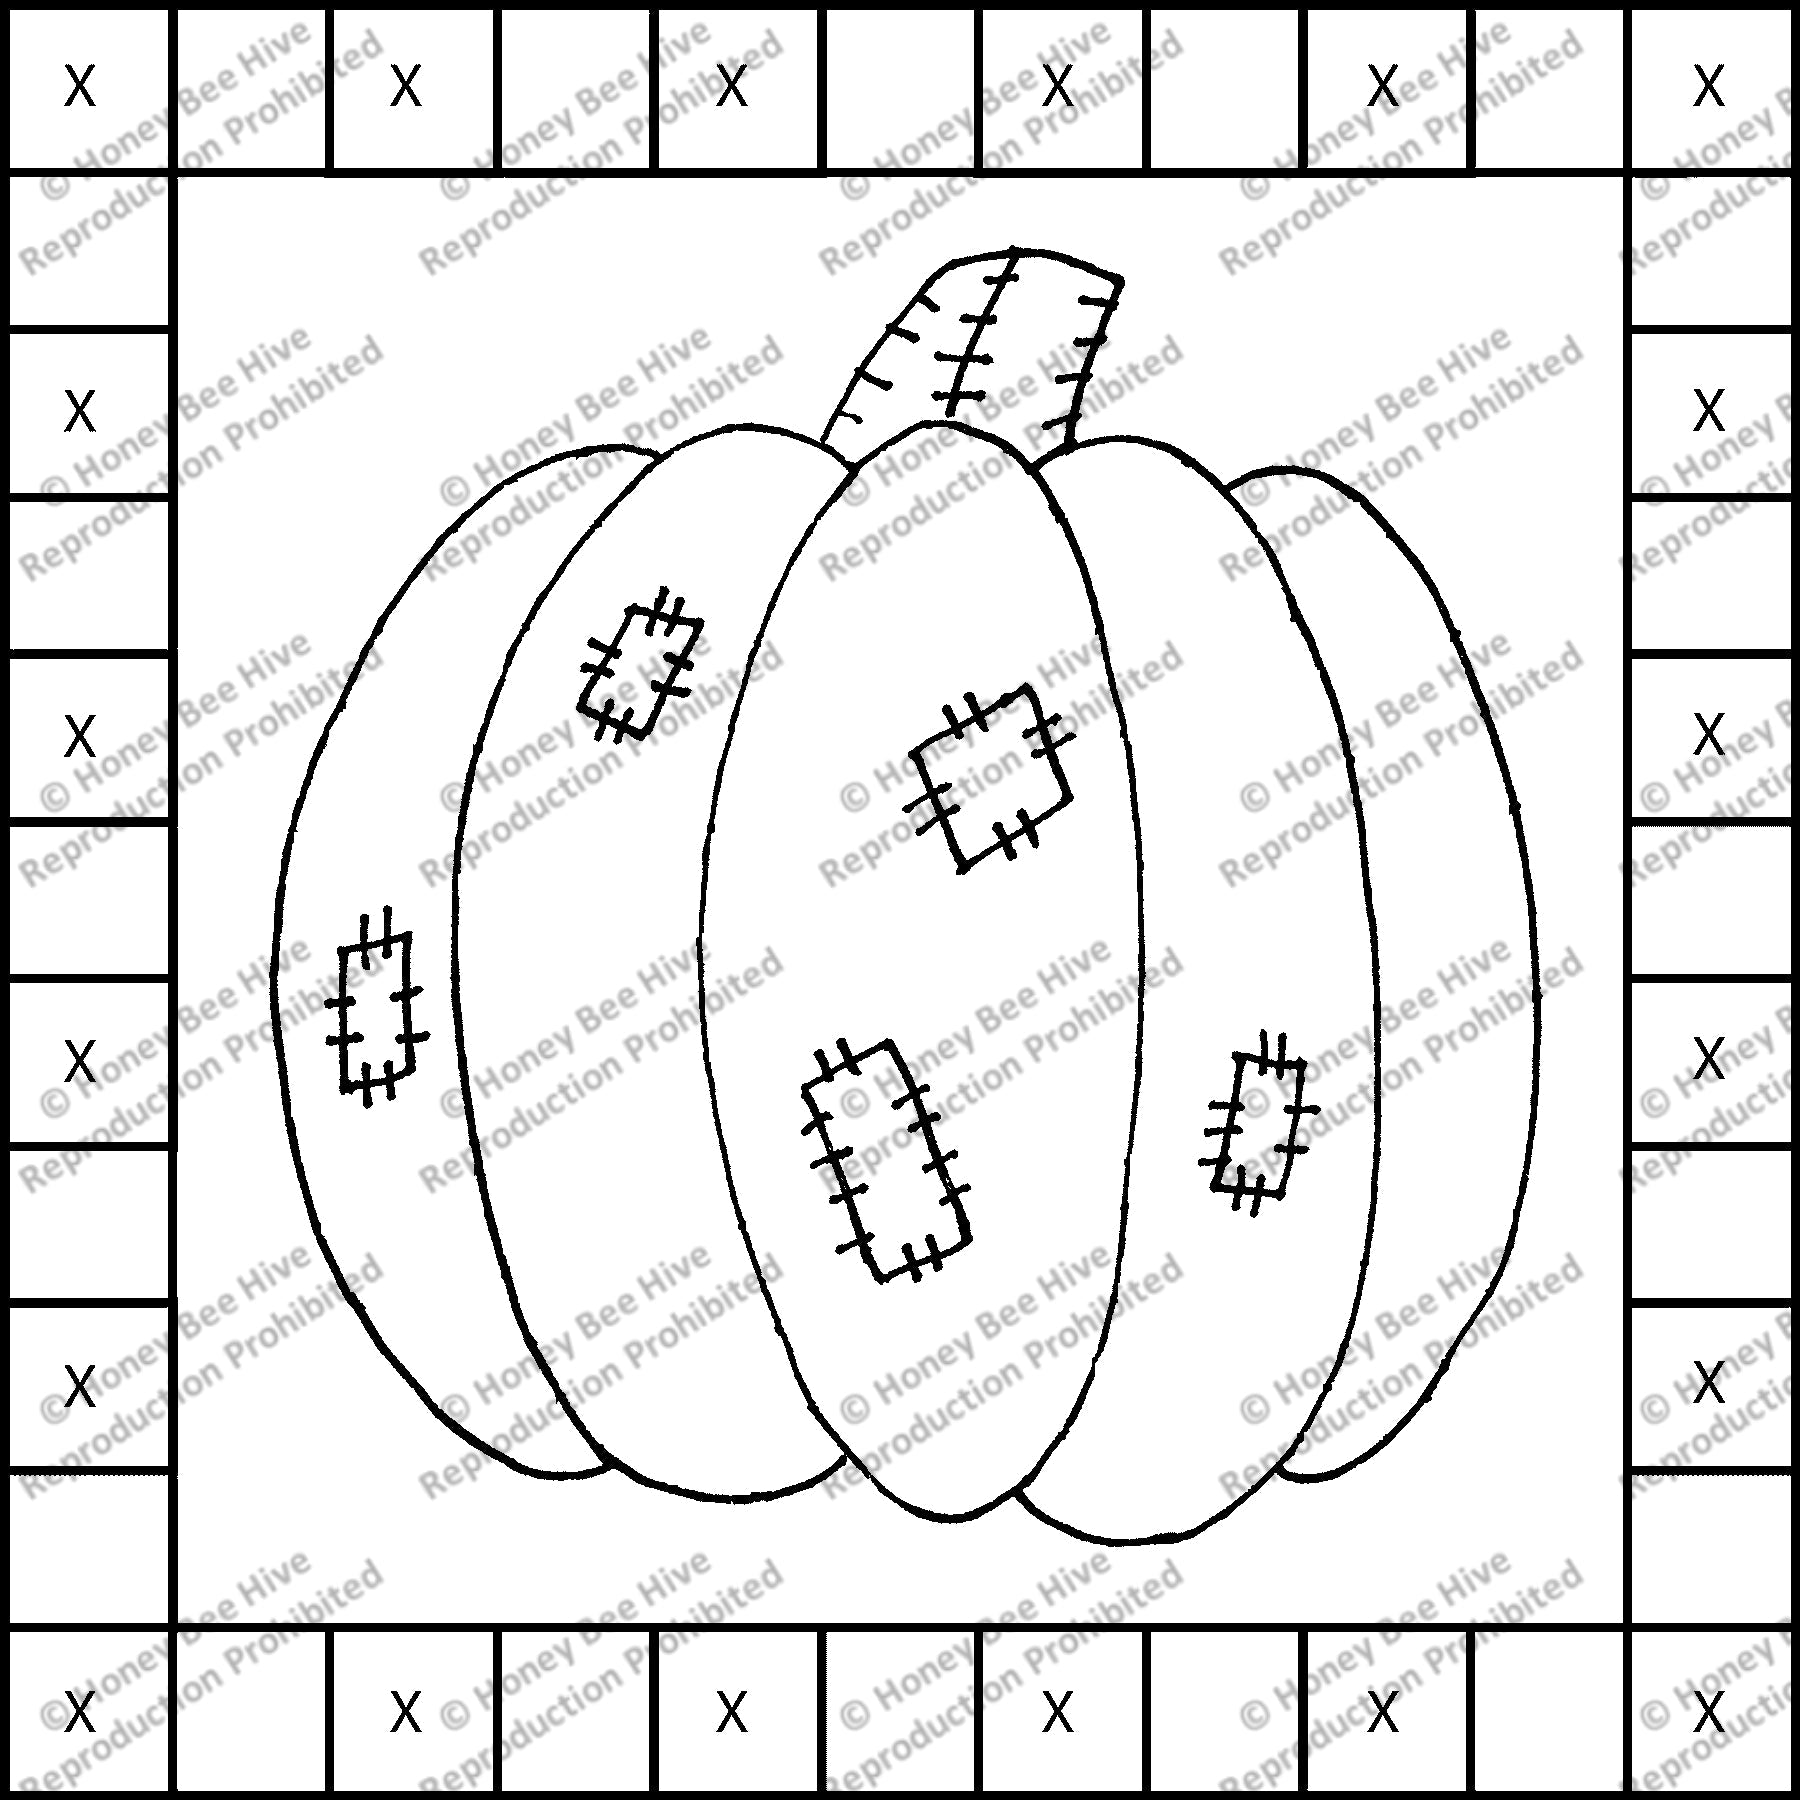 Pumpkin Patch, rug hooking pattern